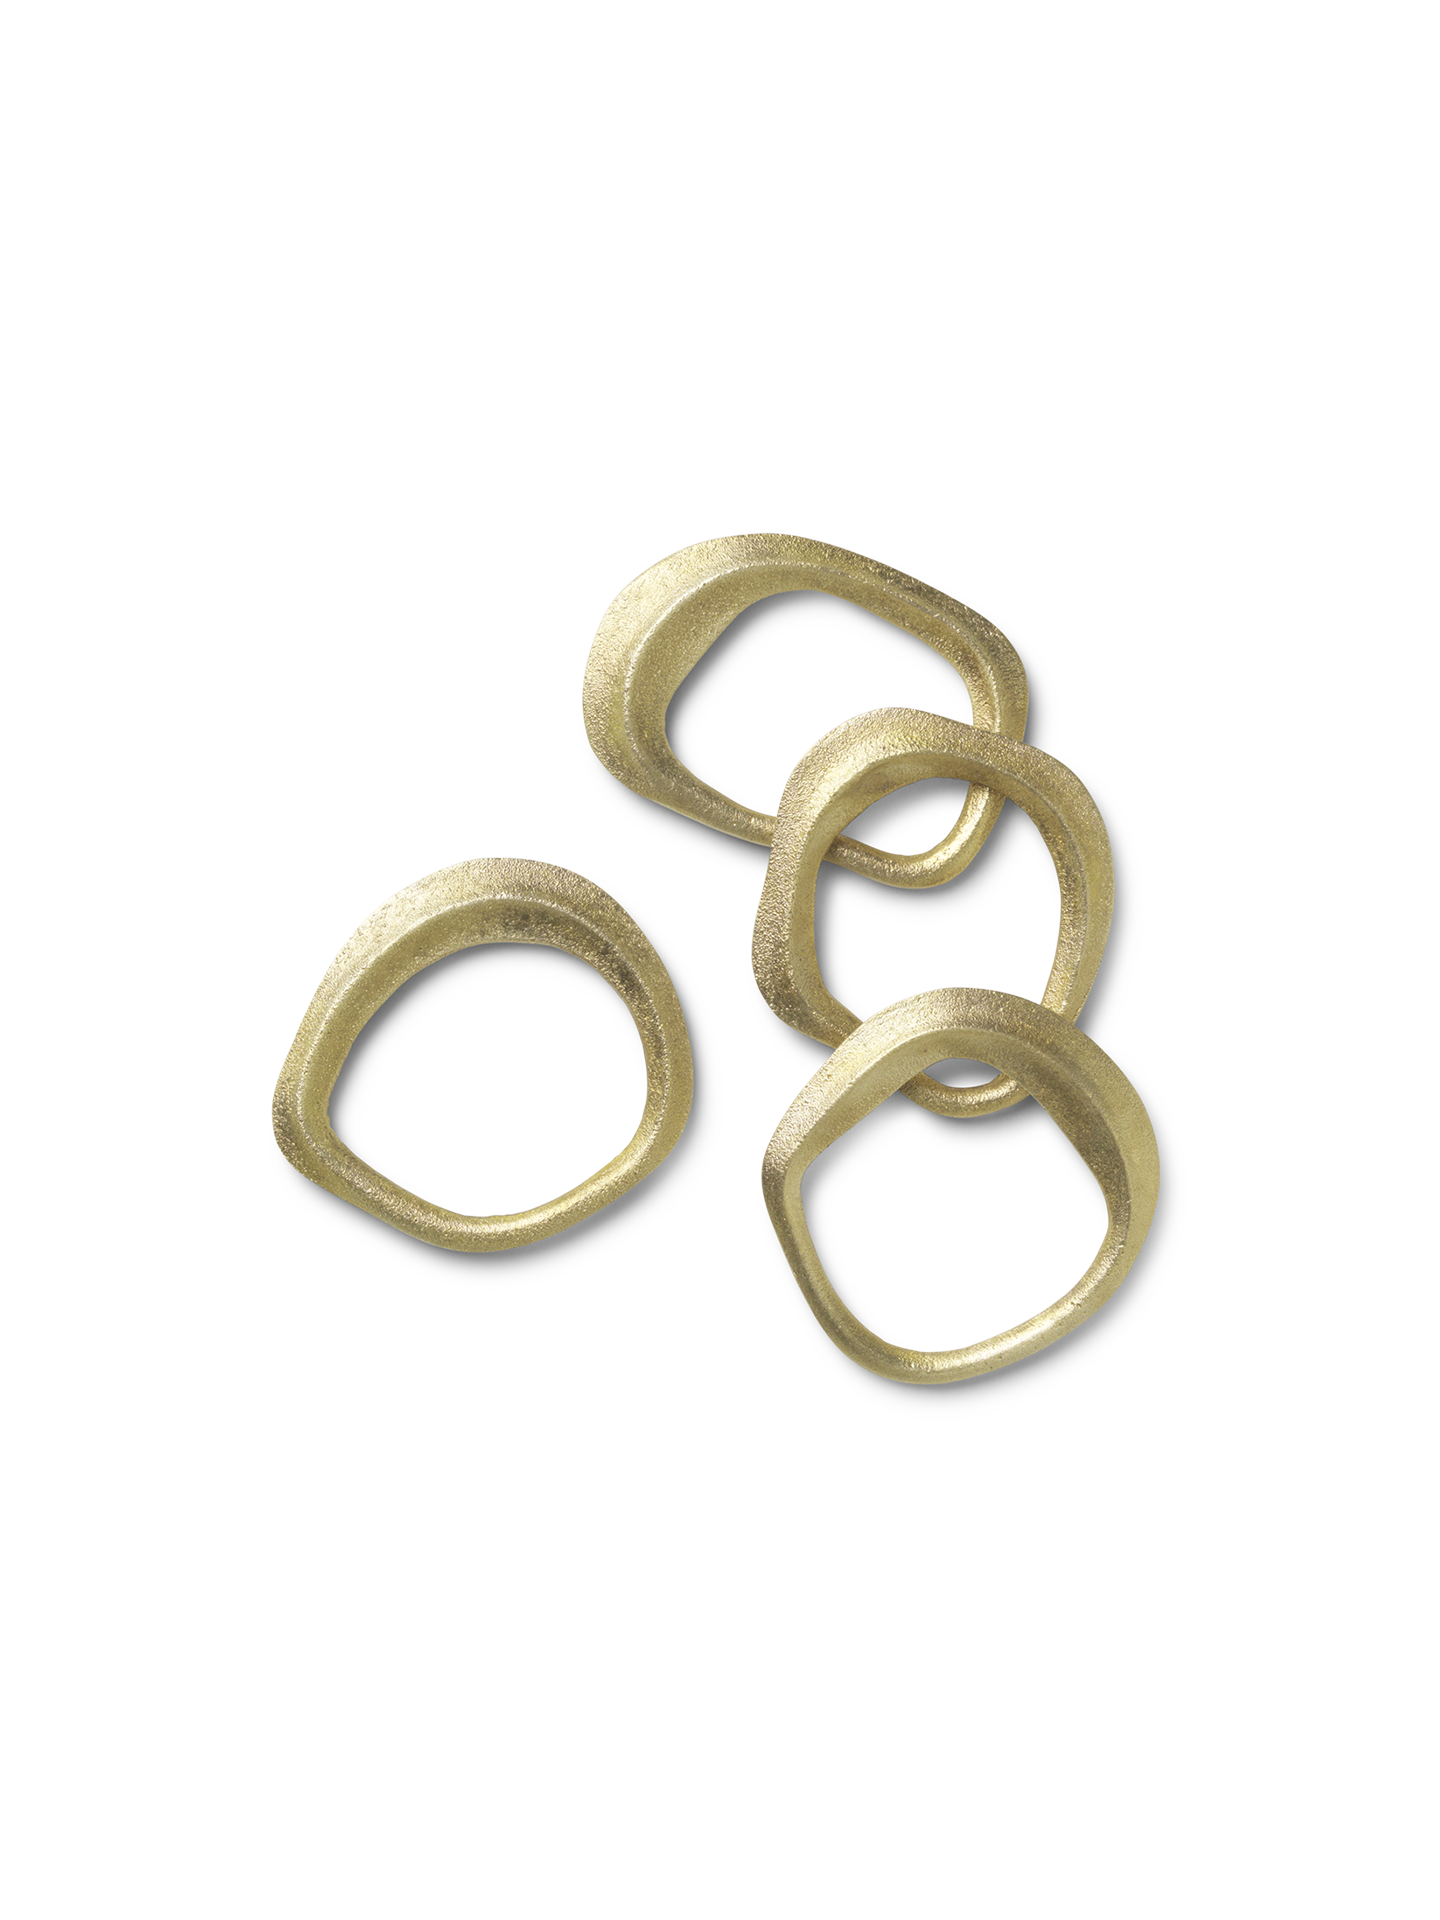 Flow Napkin Rings | Set of 4 | Brass | by ferm Living - Lifestory